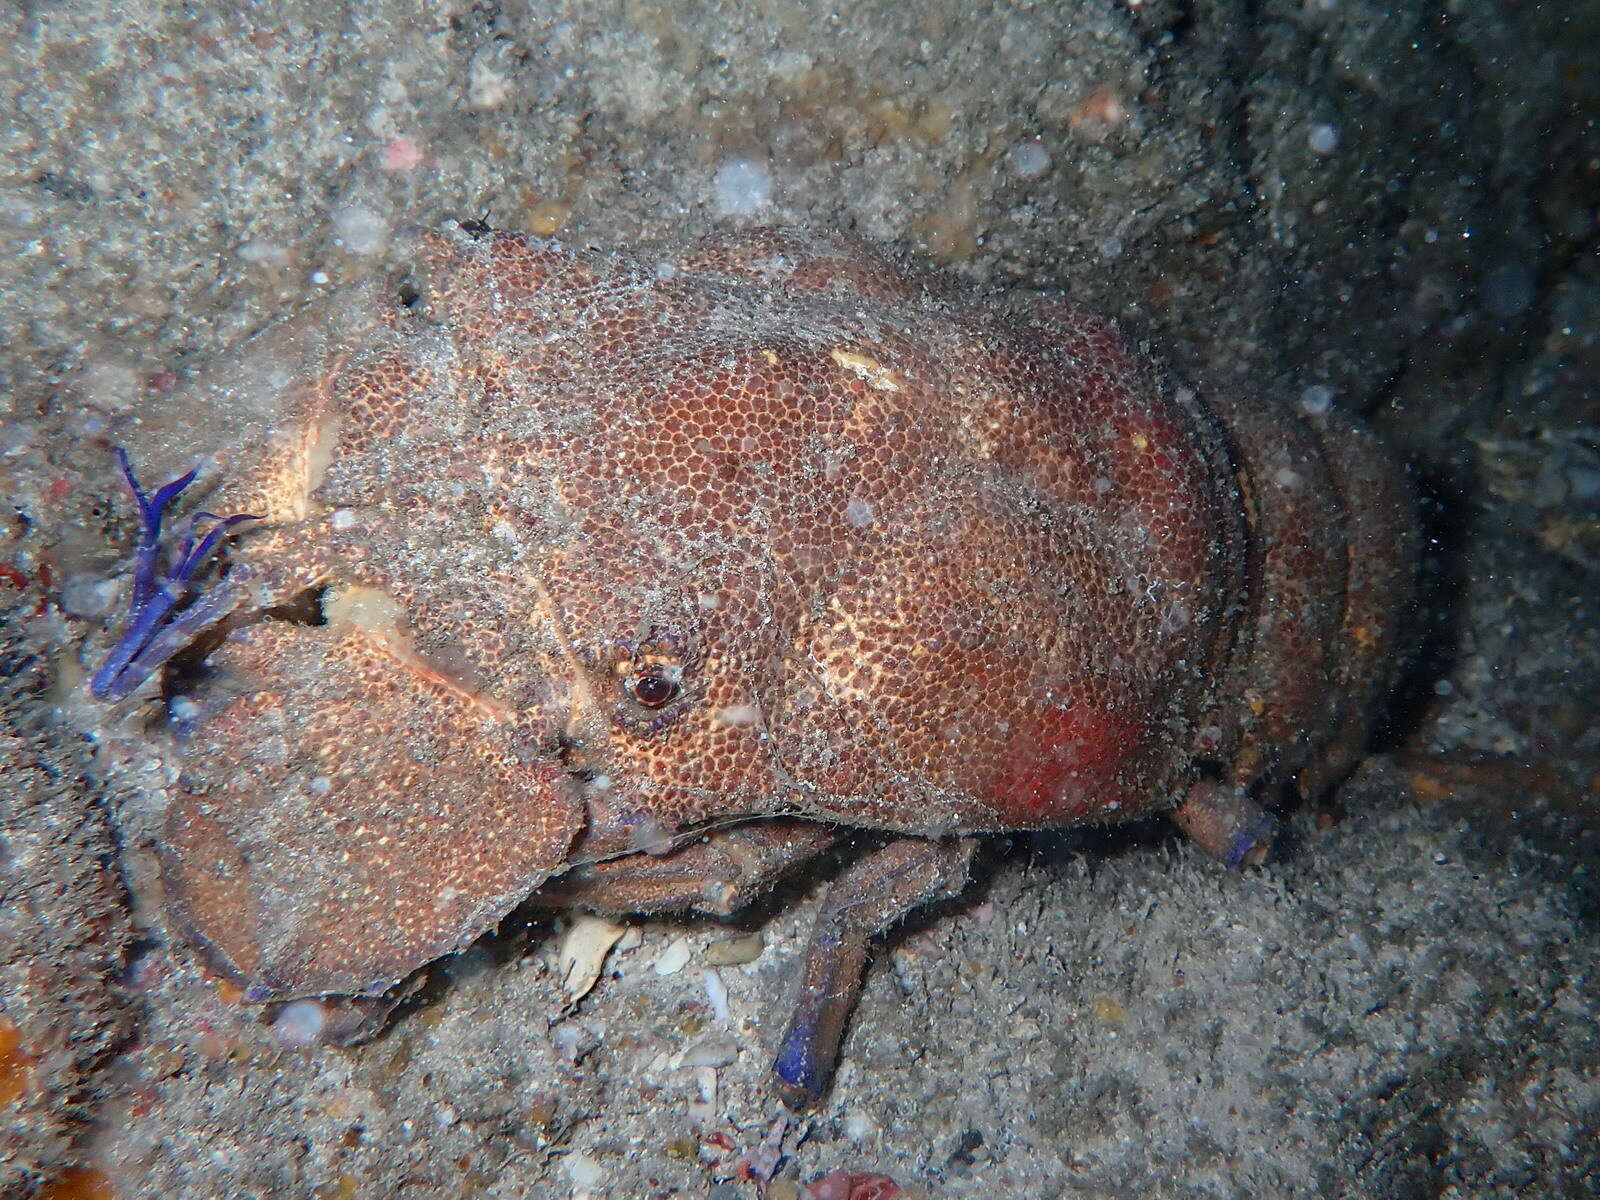 Image of red slipper lobster